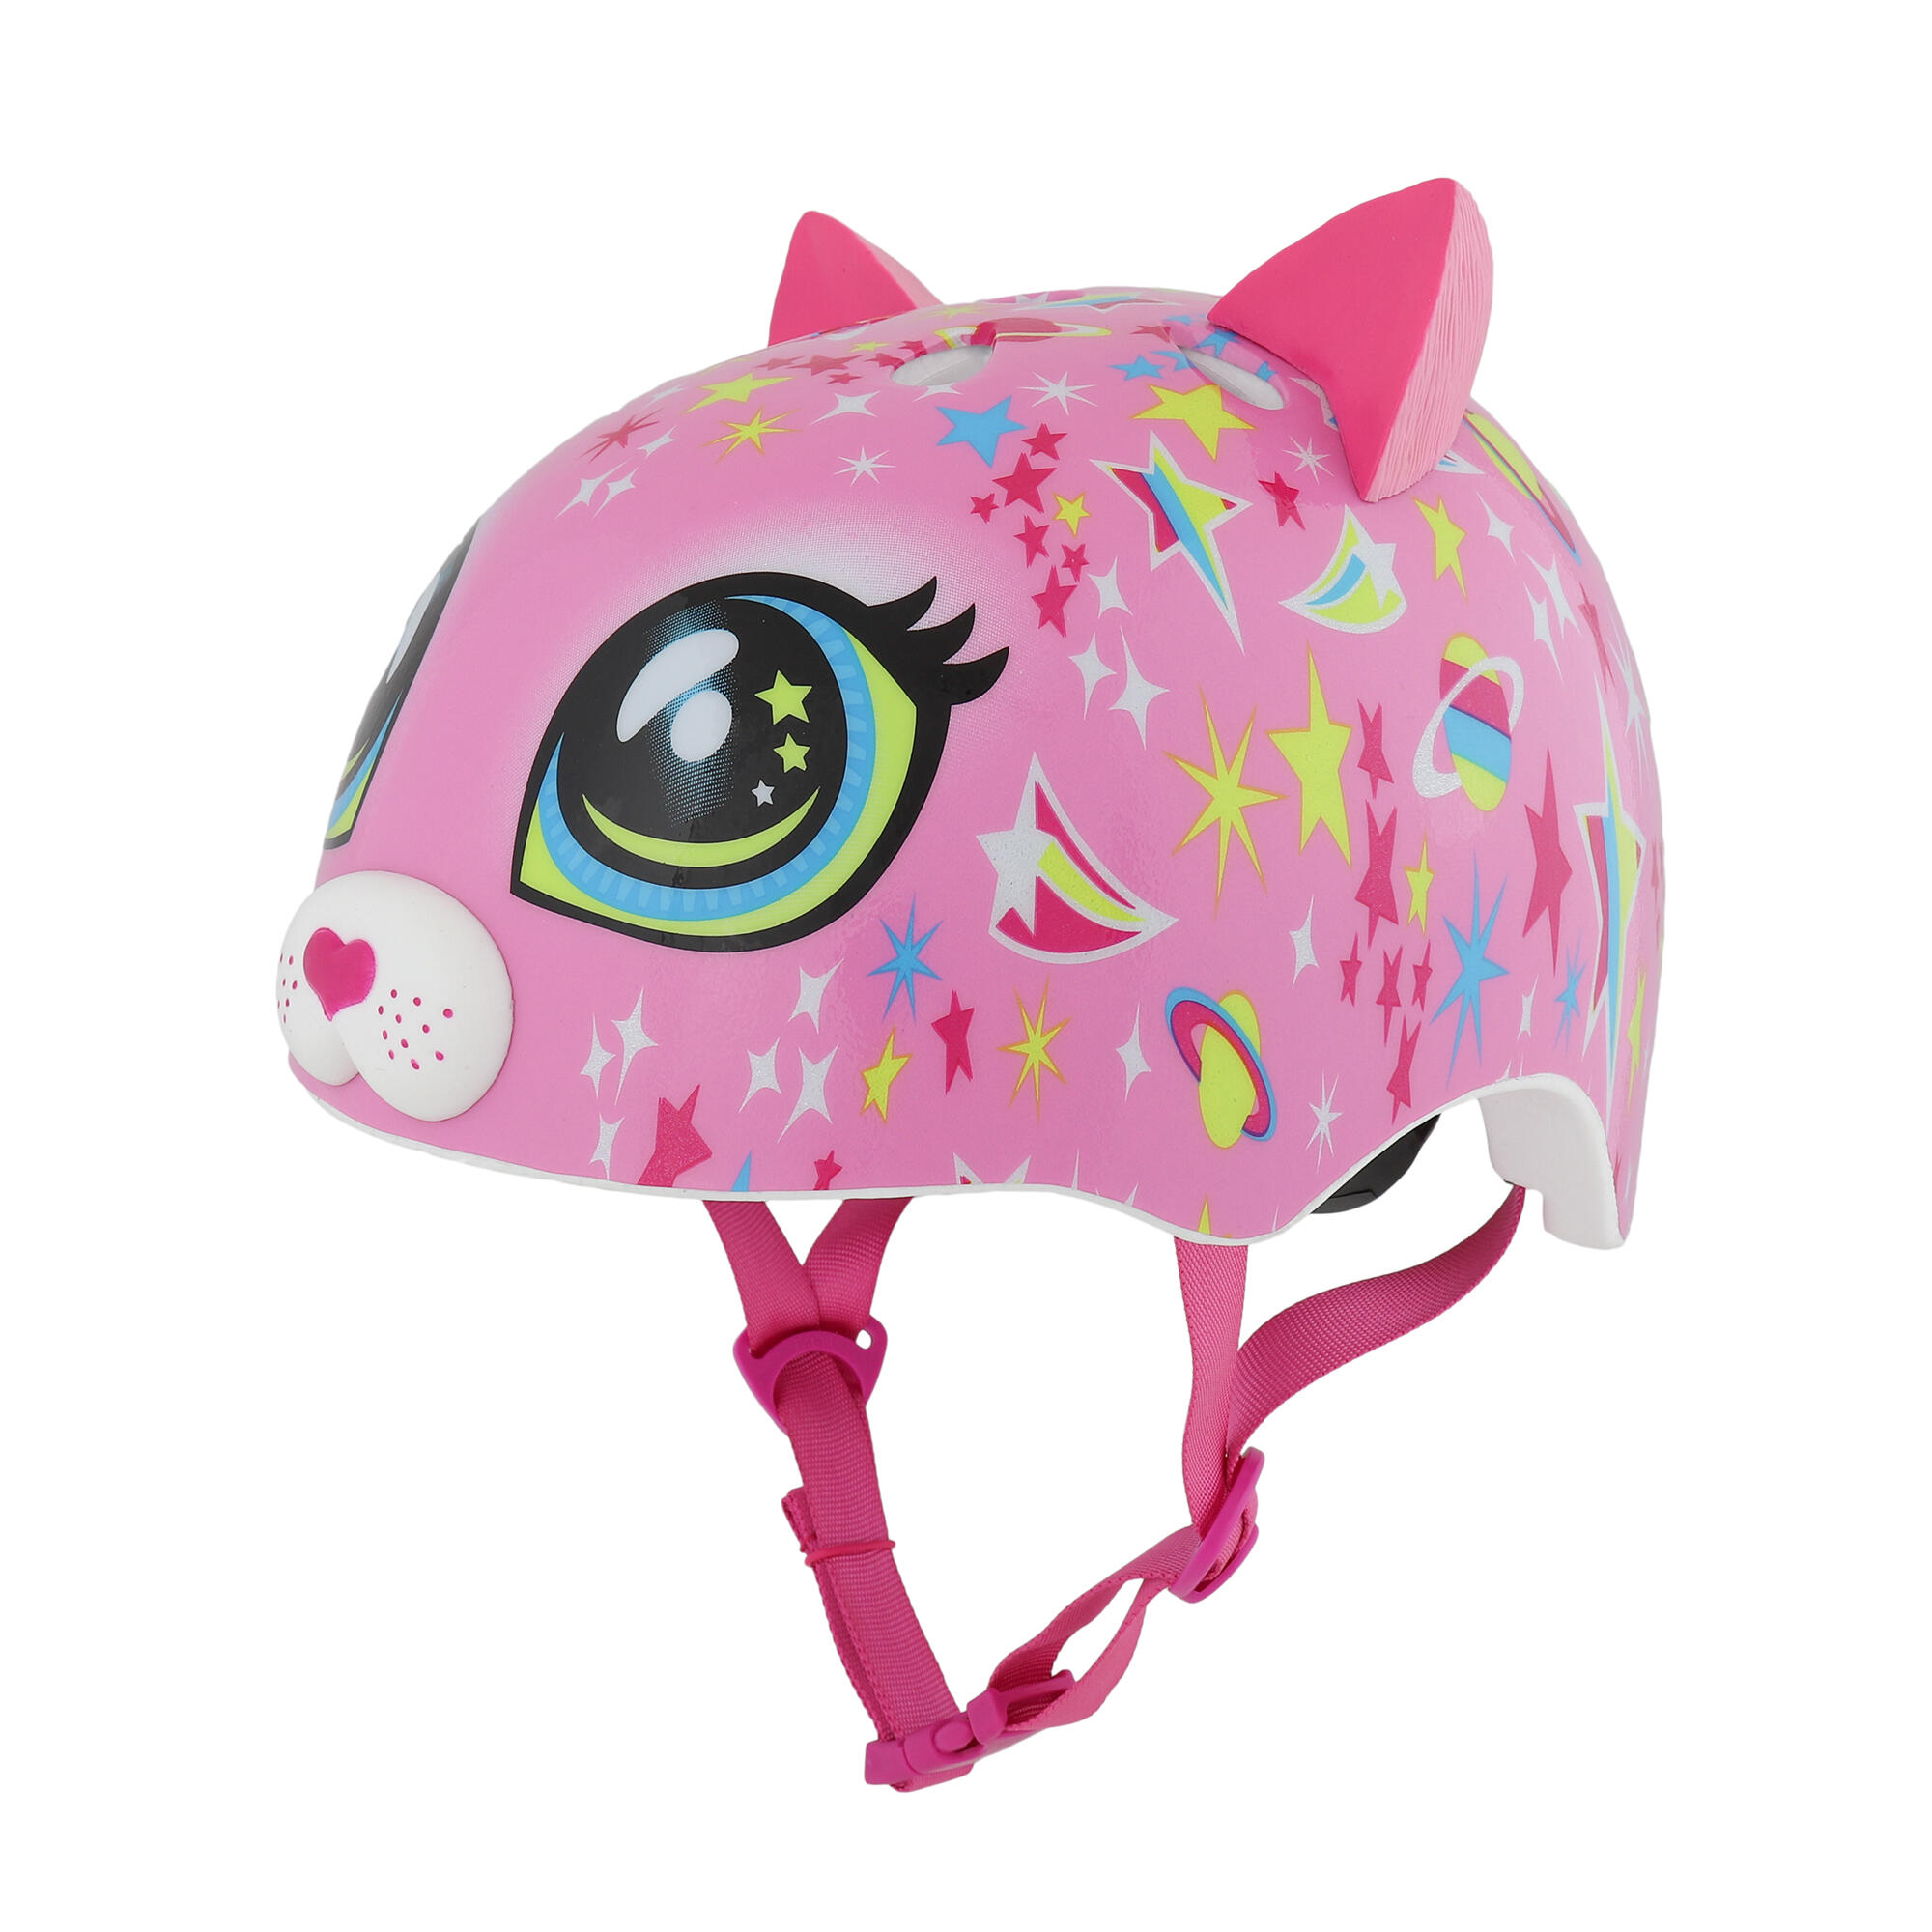 Raskullz FS Toddlers Helmet - Astro Cat Pink Astro Cat Pink Unisize 48-52cm 1/5